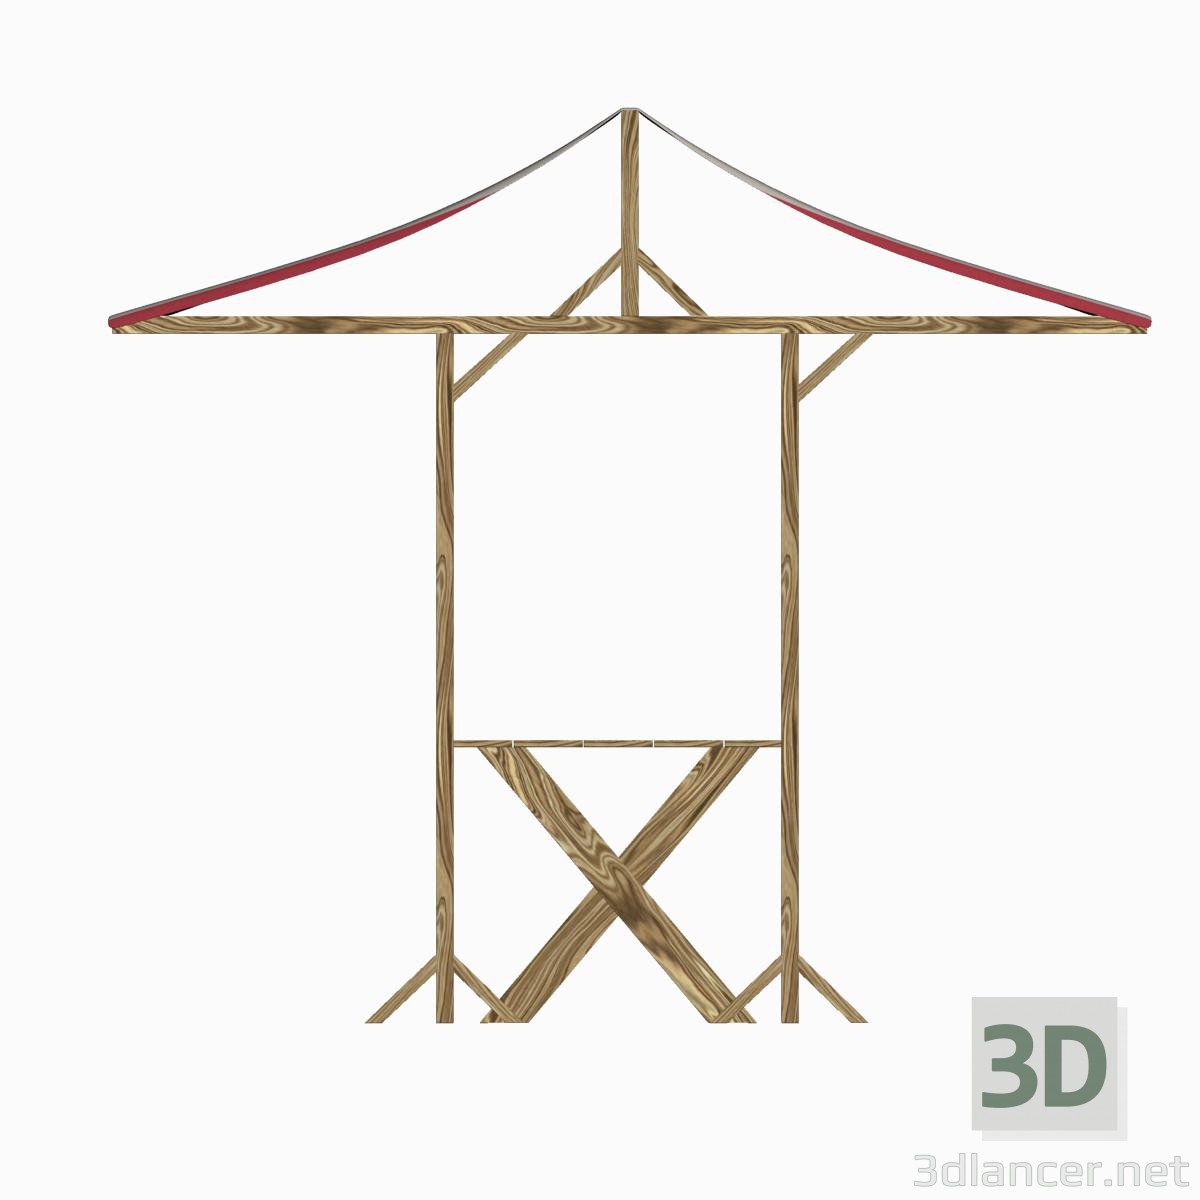 Handel-Zelte 3D-Modell kaufen - Rendern